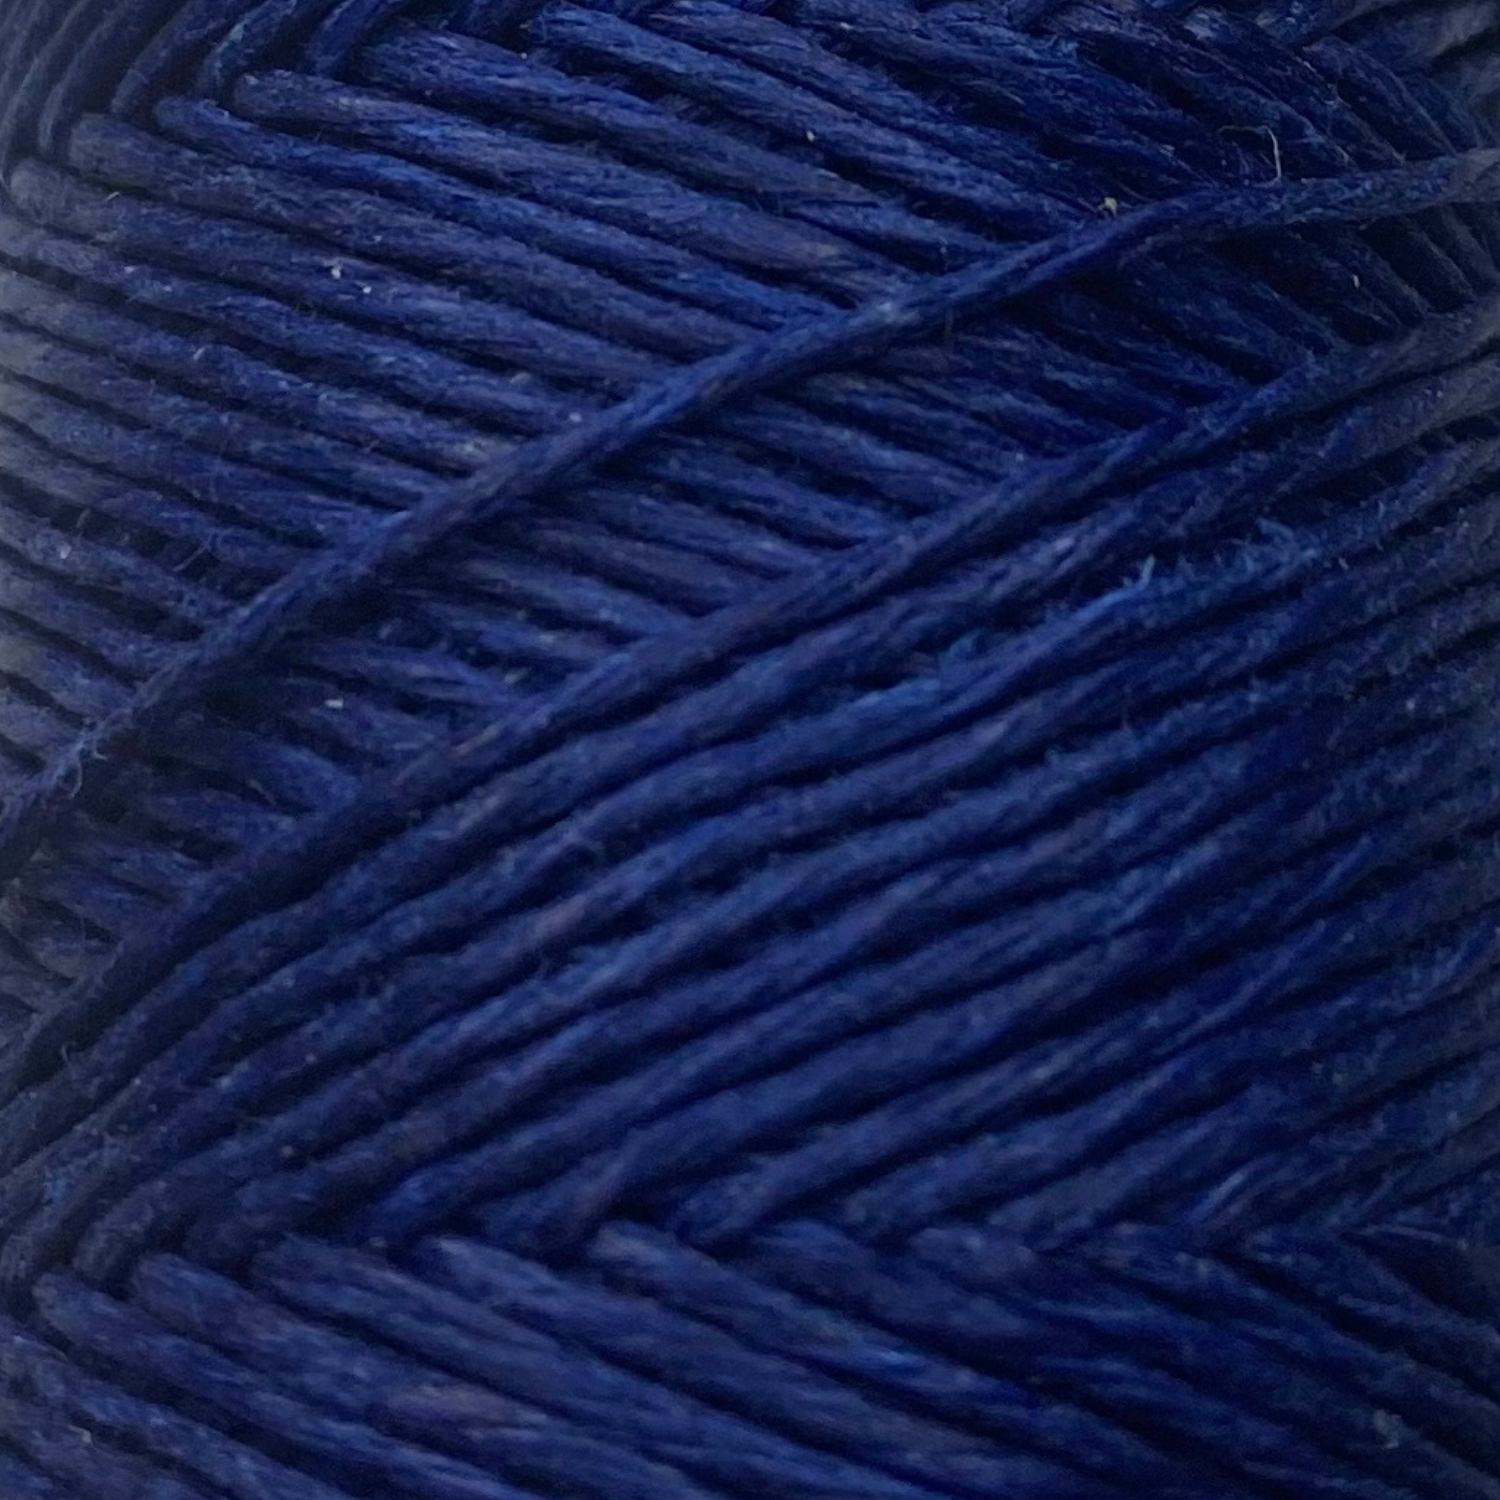 Hemp Cord Blue .5mm #10